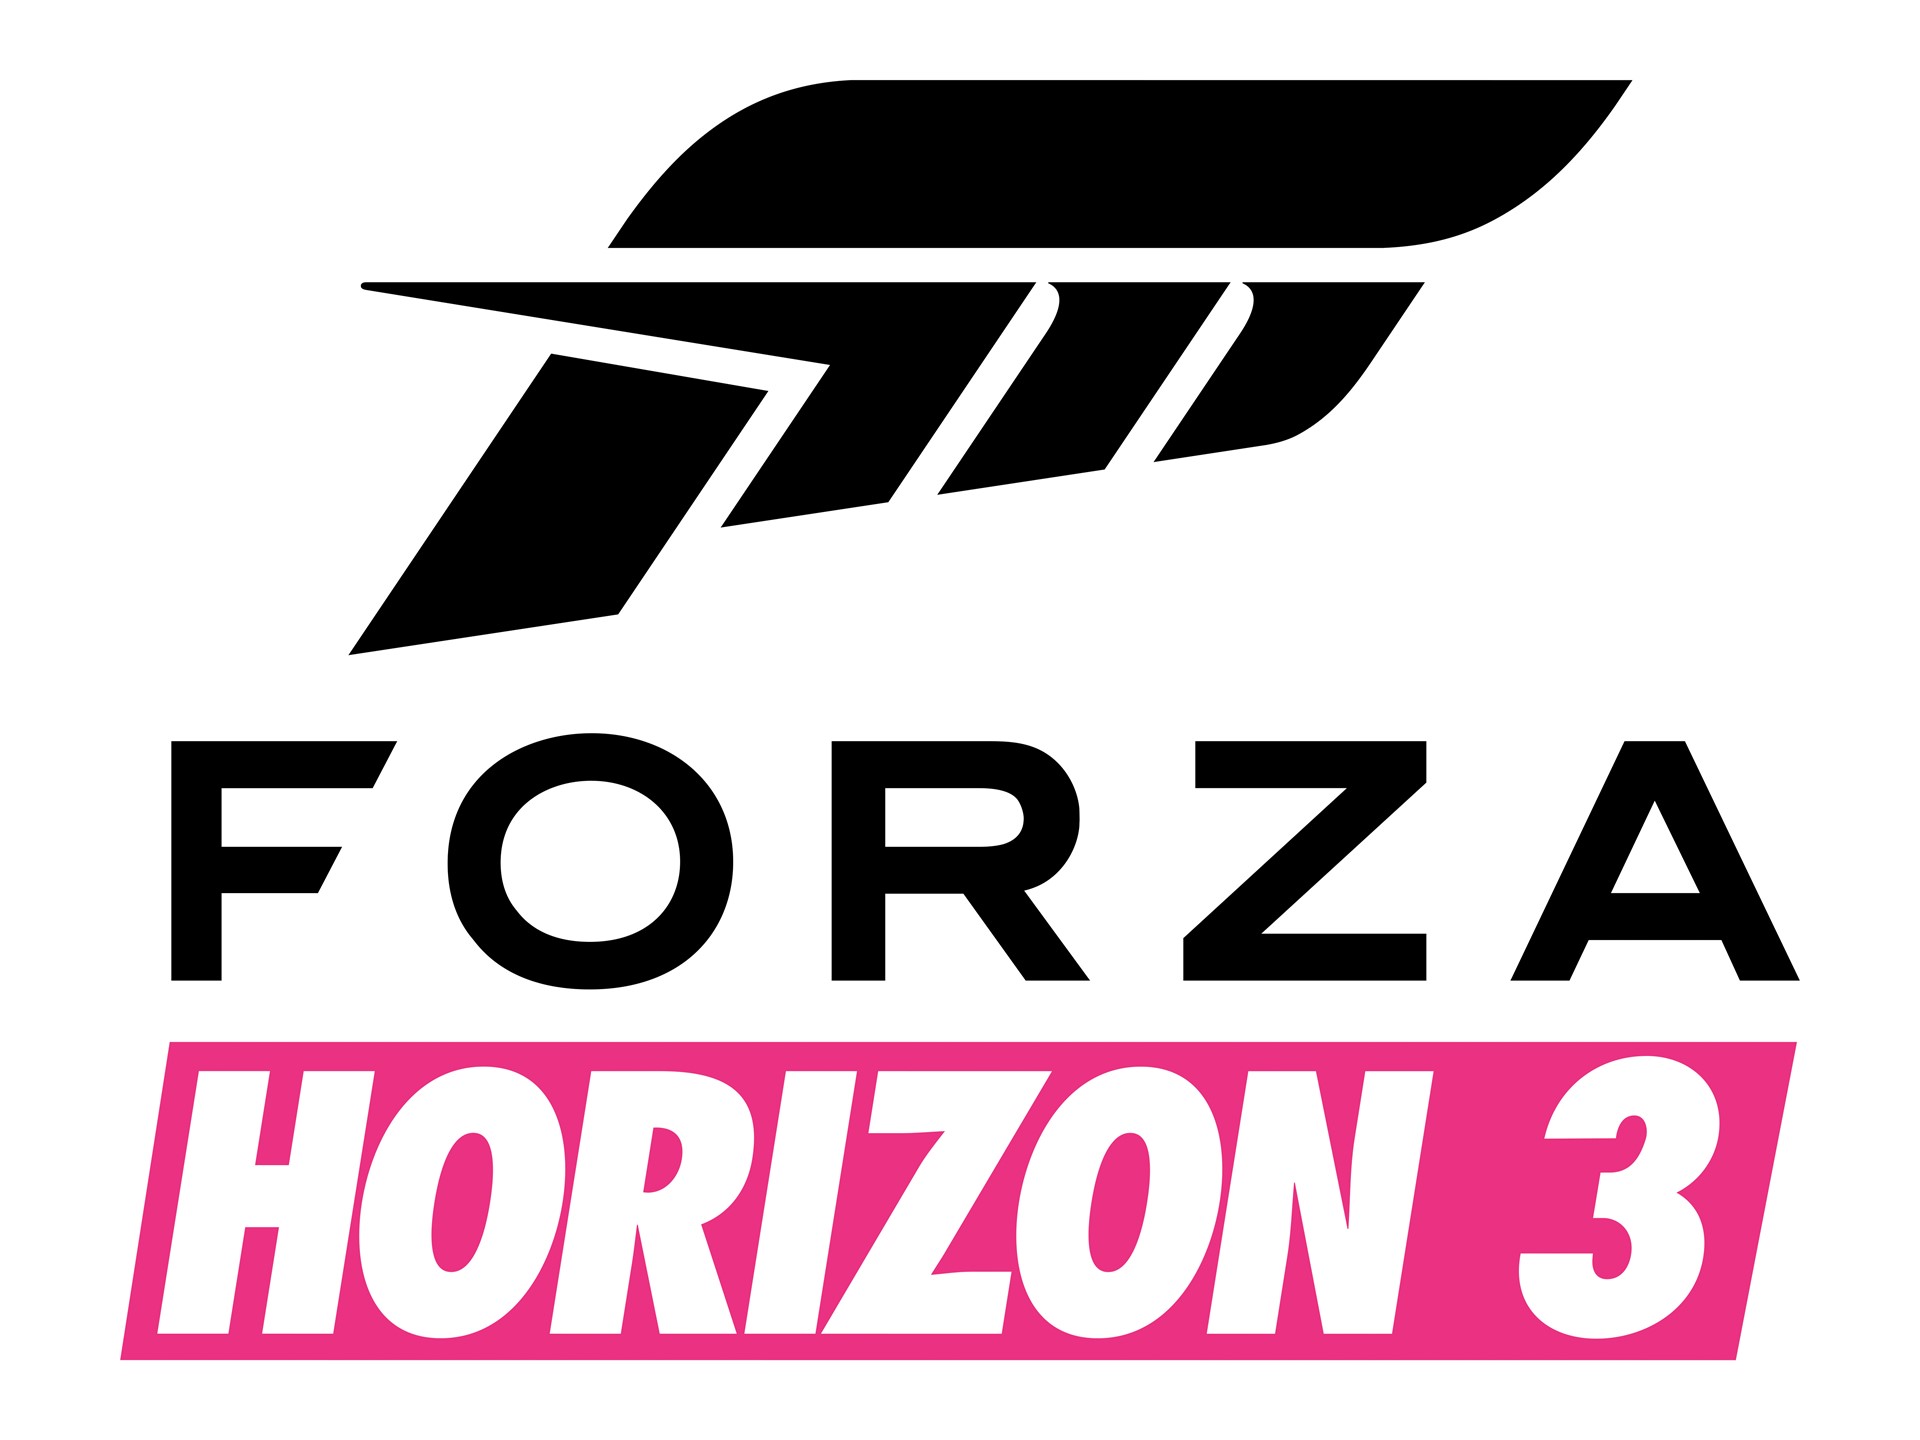 Forza Horizon 3 - Wikipedia